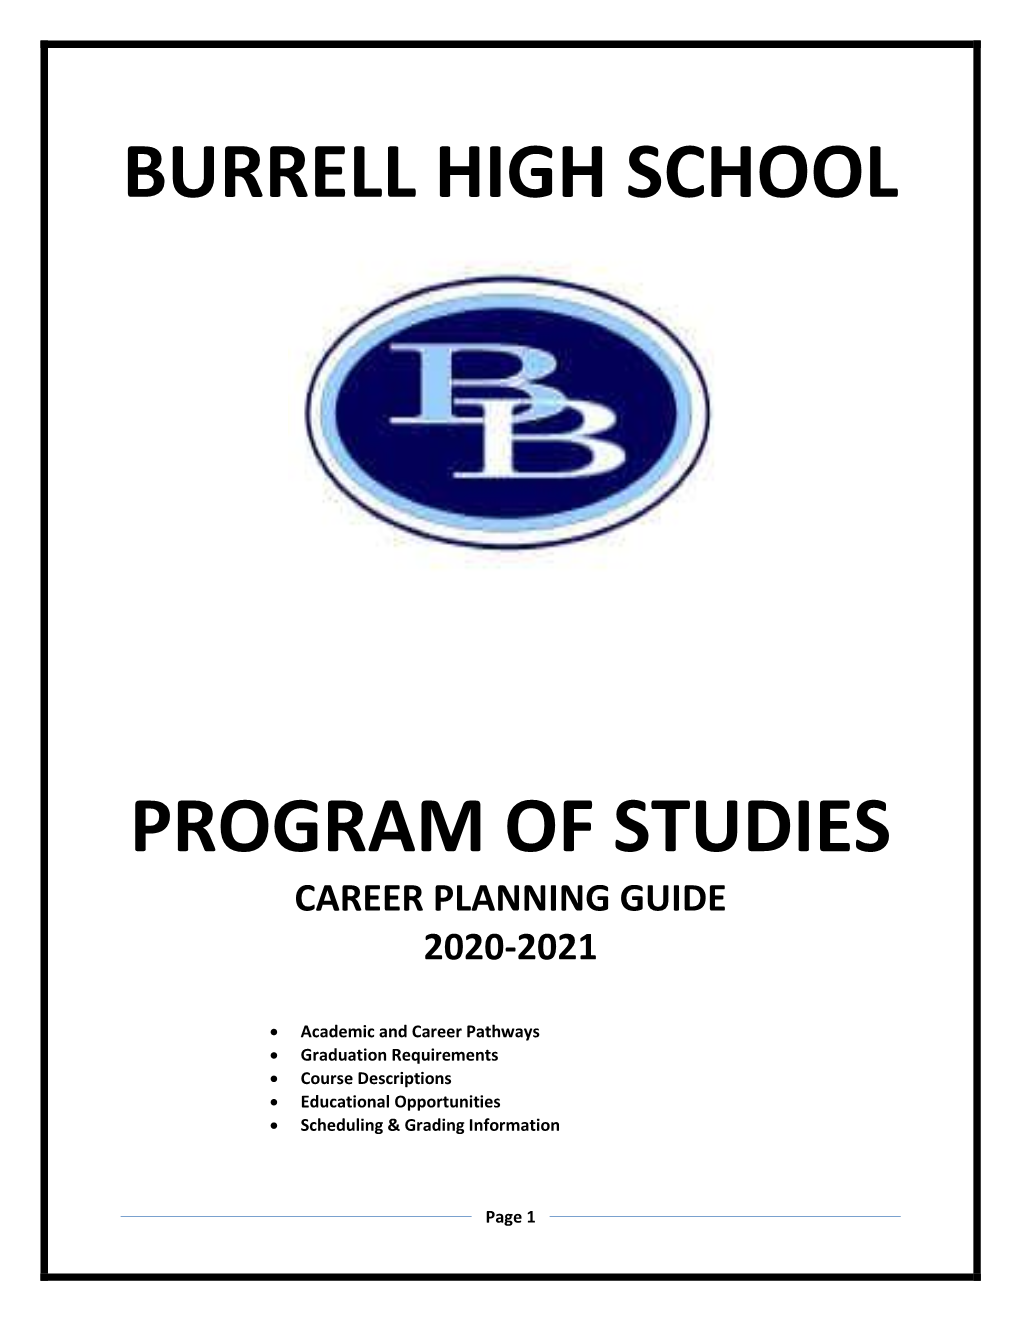 Burrell High School Program of Studies